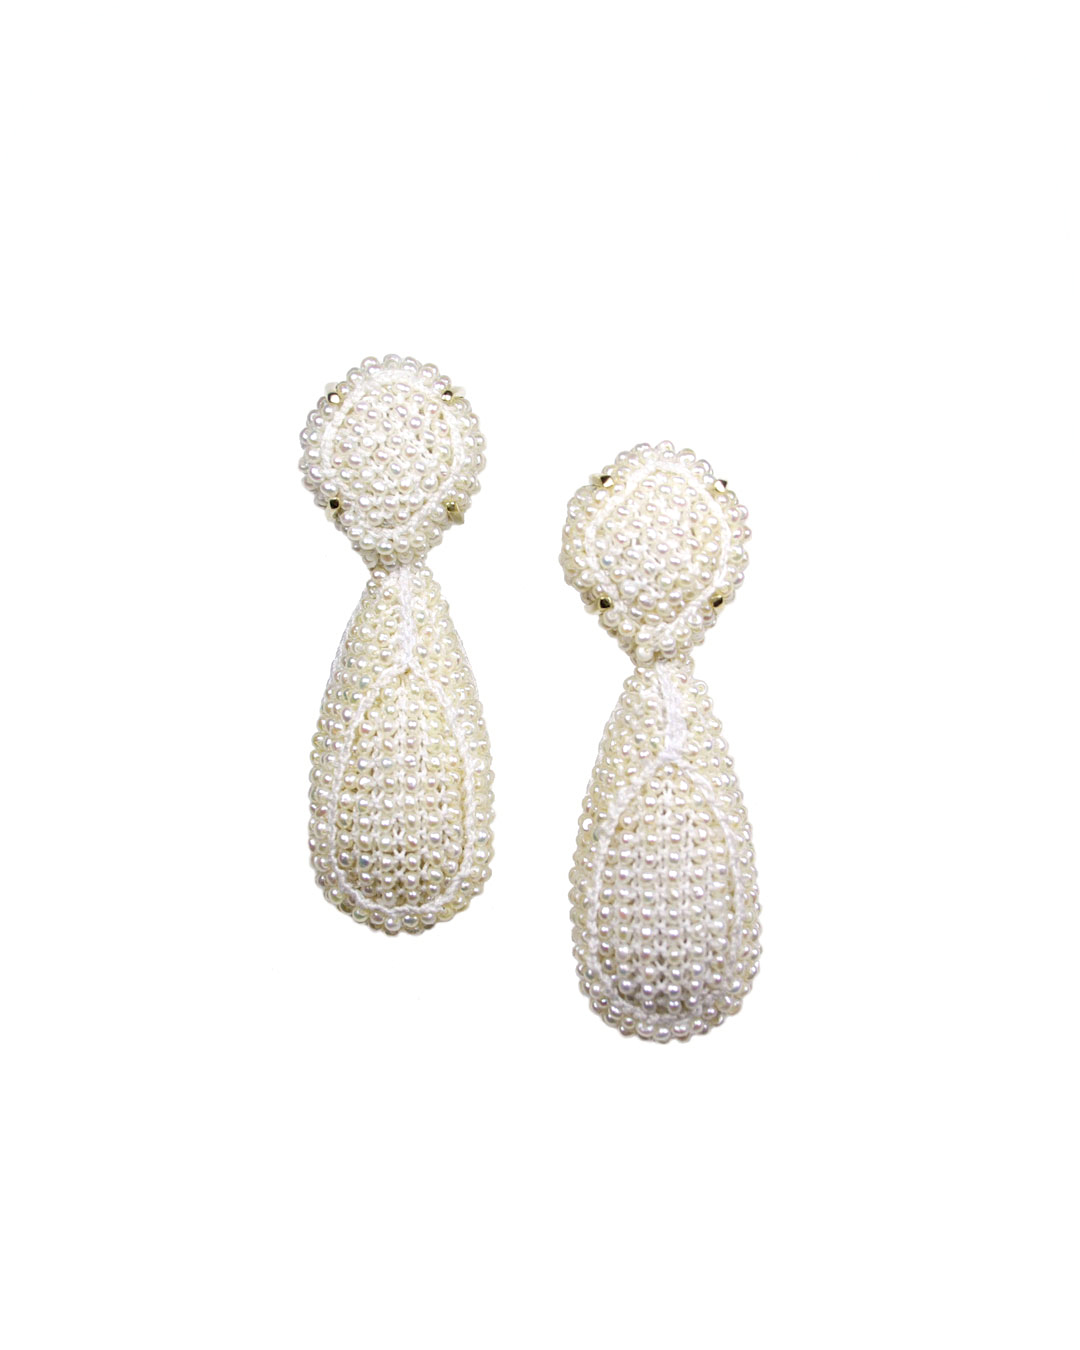 Carmen Hauser, Garden of Eden, 2008, earrings; pearls, thread, gold, 56 x 20 x 16 mm, €1450